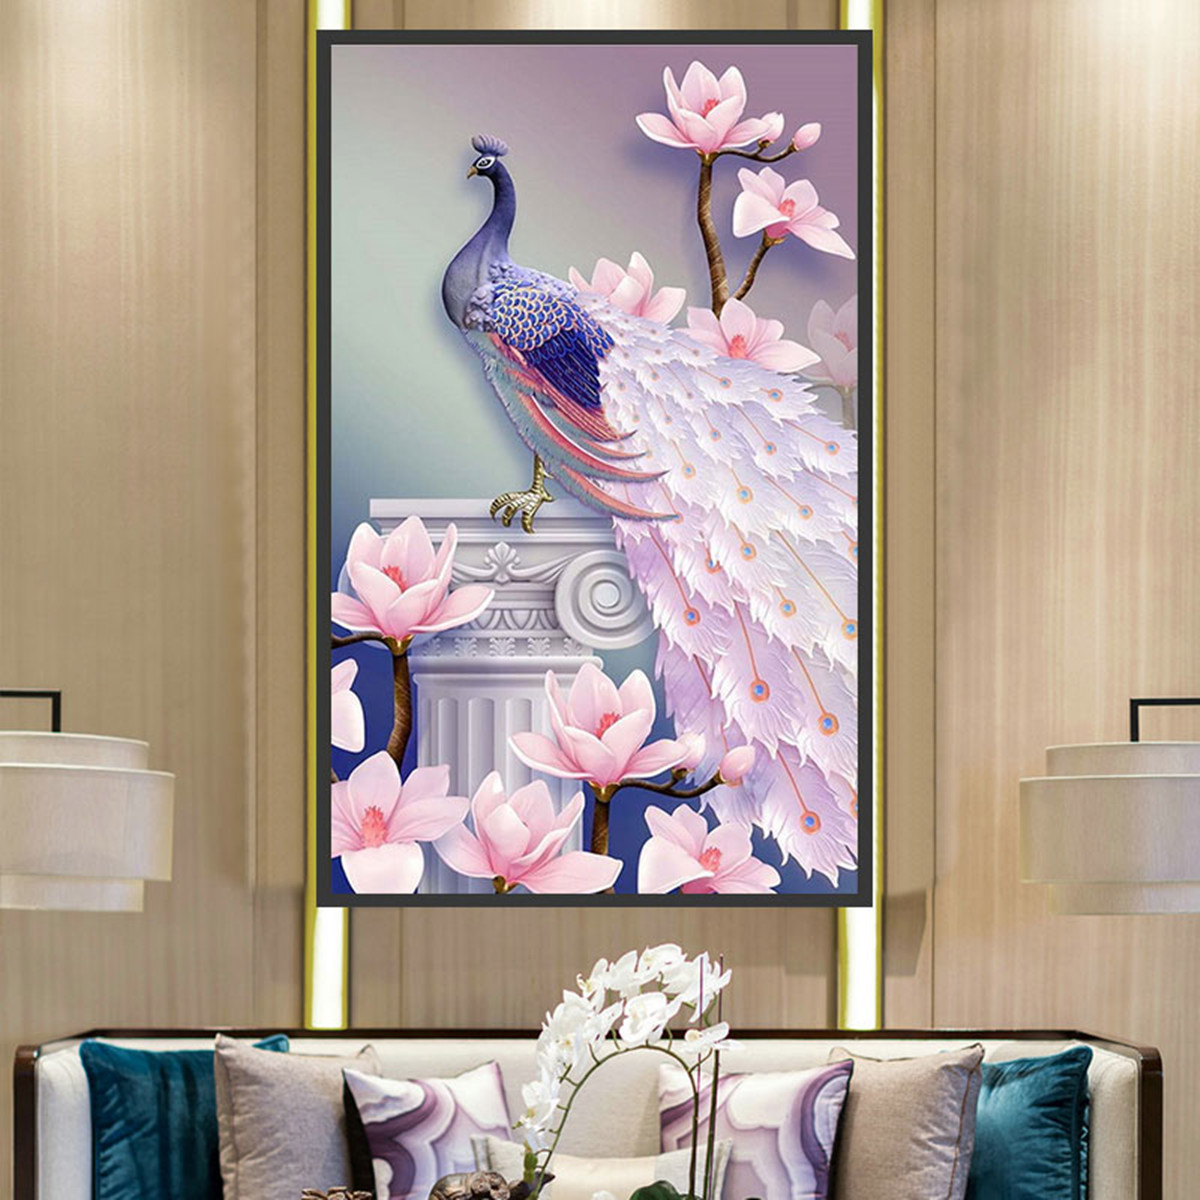 DIY-5D-Diamond-Painting-Magnolia-Peacock-Art-Craft-Embroidery-Stitch-Kit-Handmade-Wall-Decorations-G-1285865-7